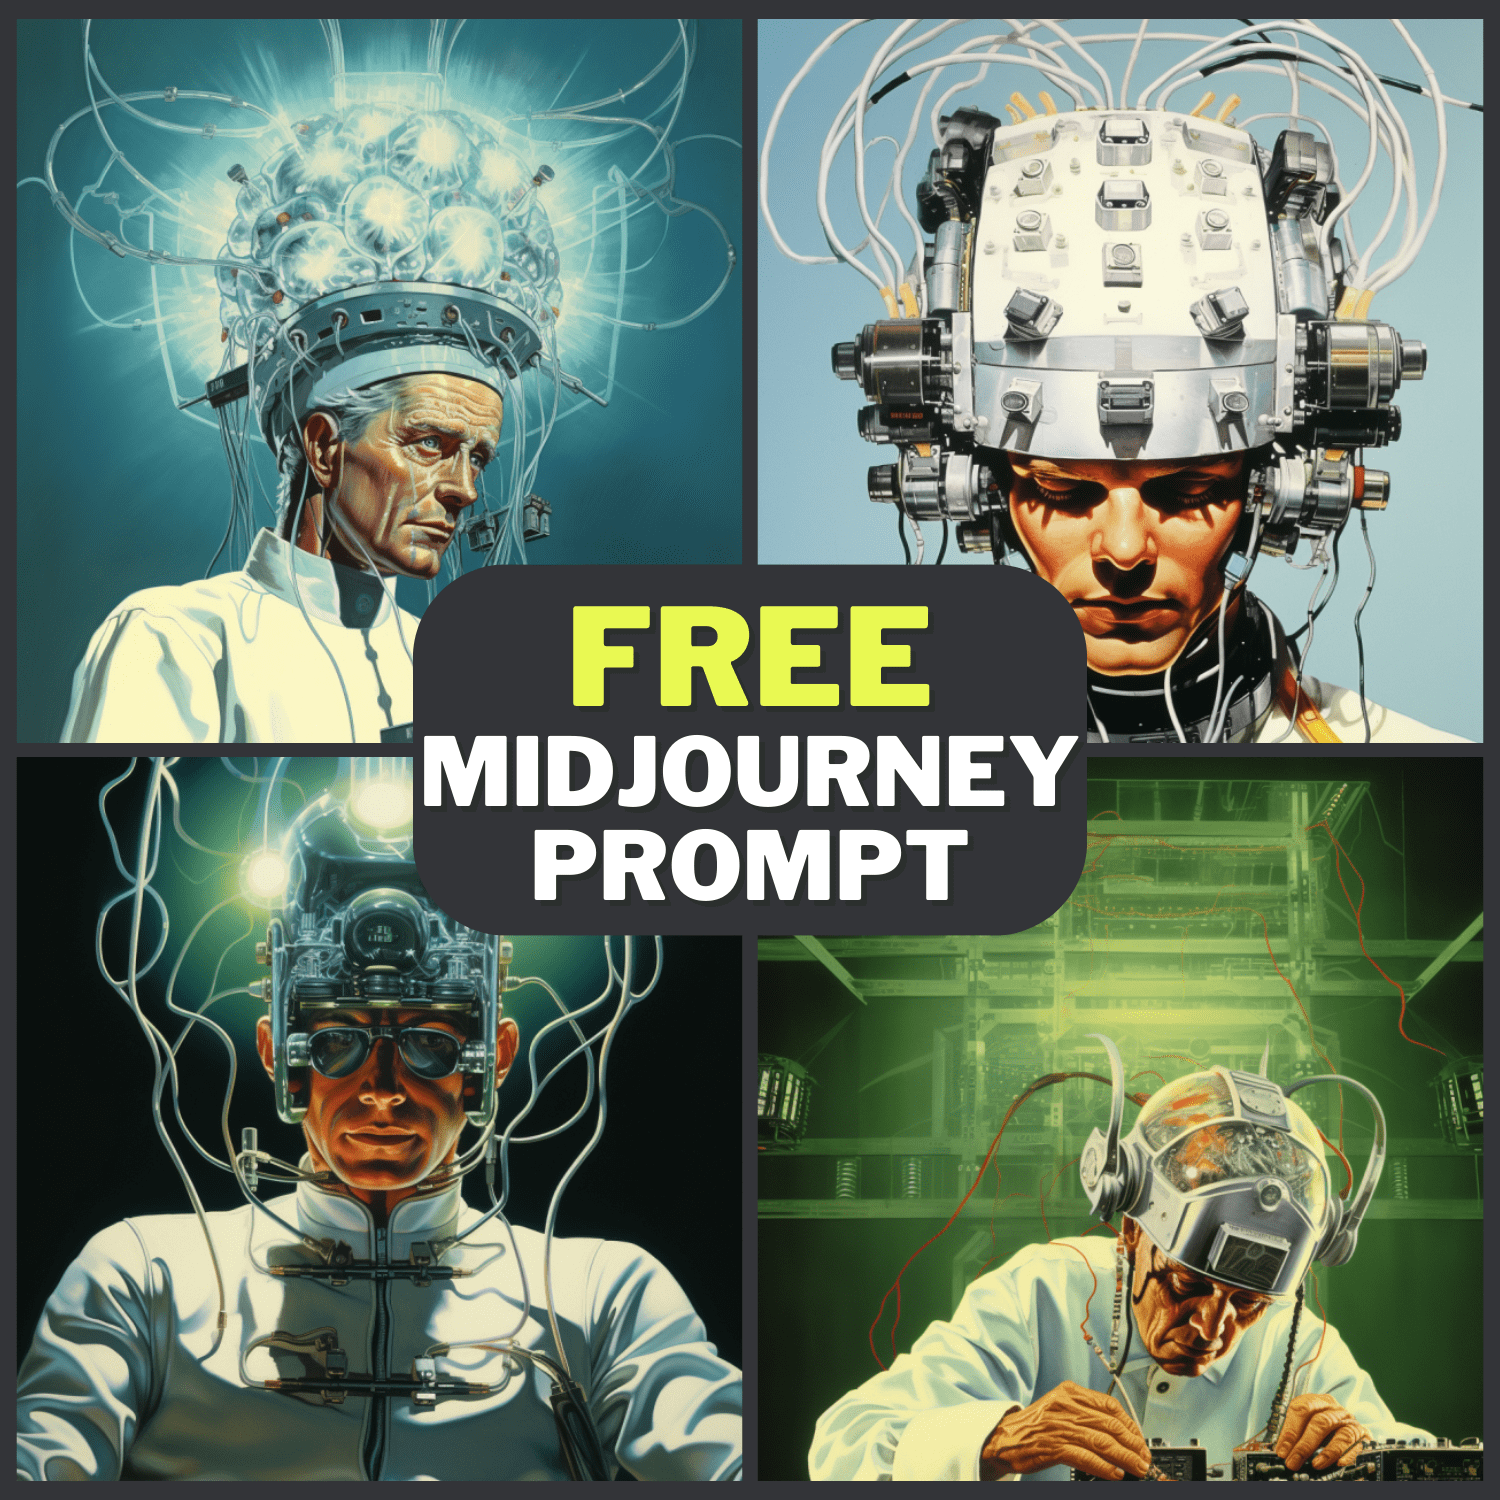 Male Scientist Sci Fi Illustration Free Midjourney Prompt 1